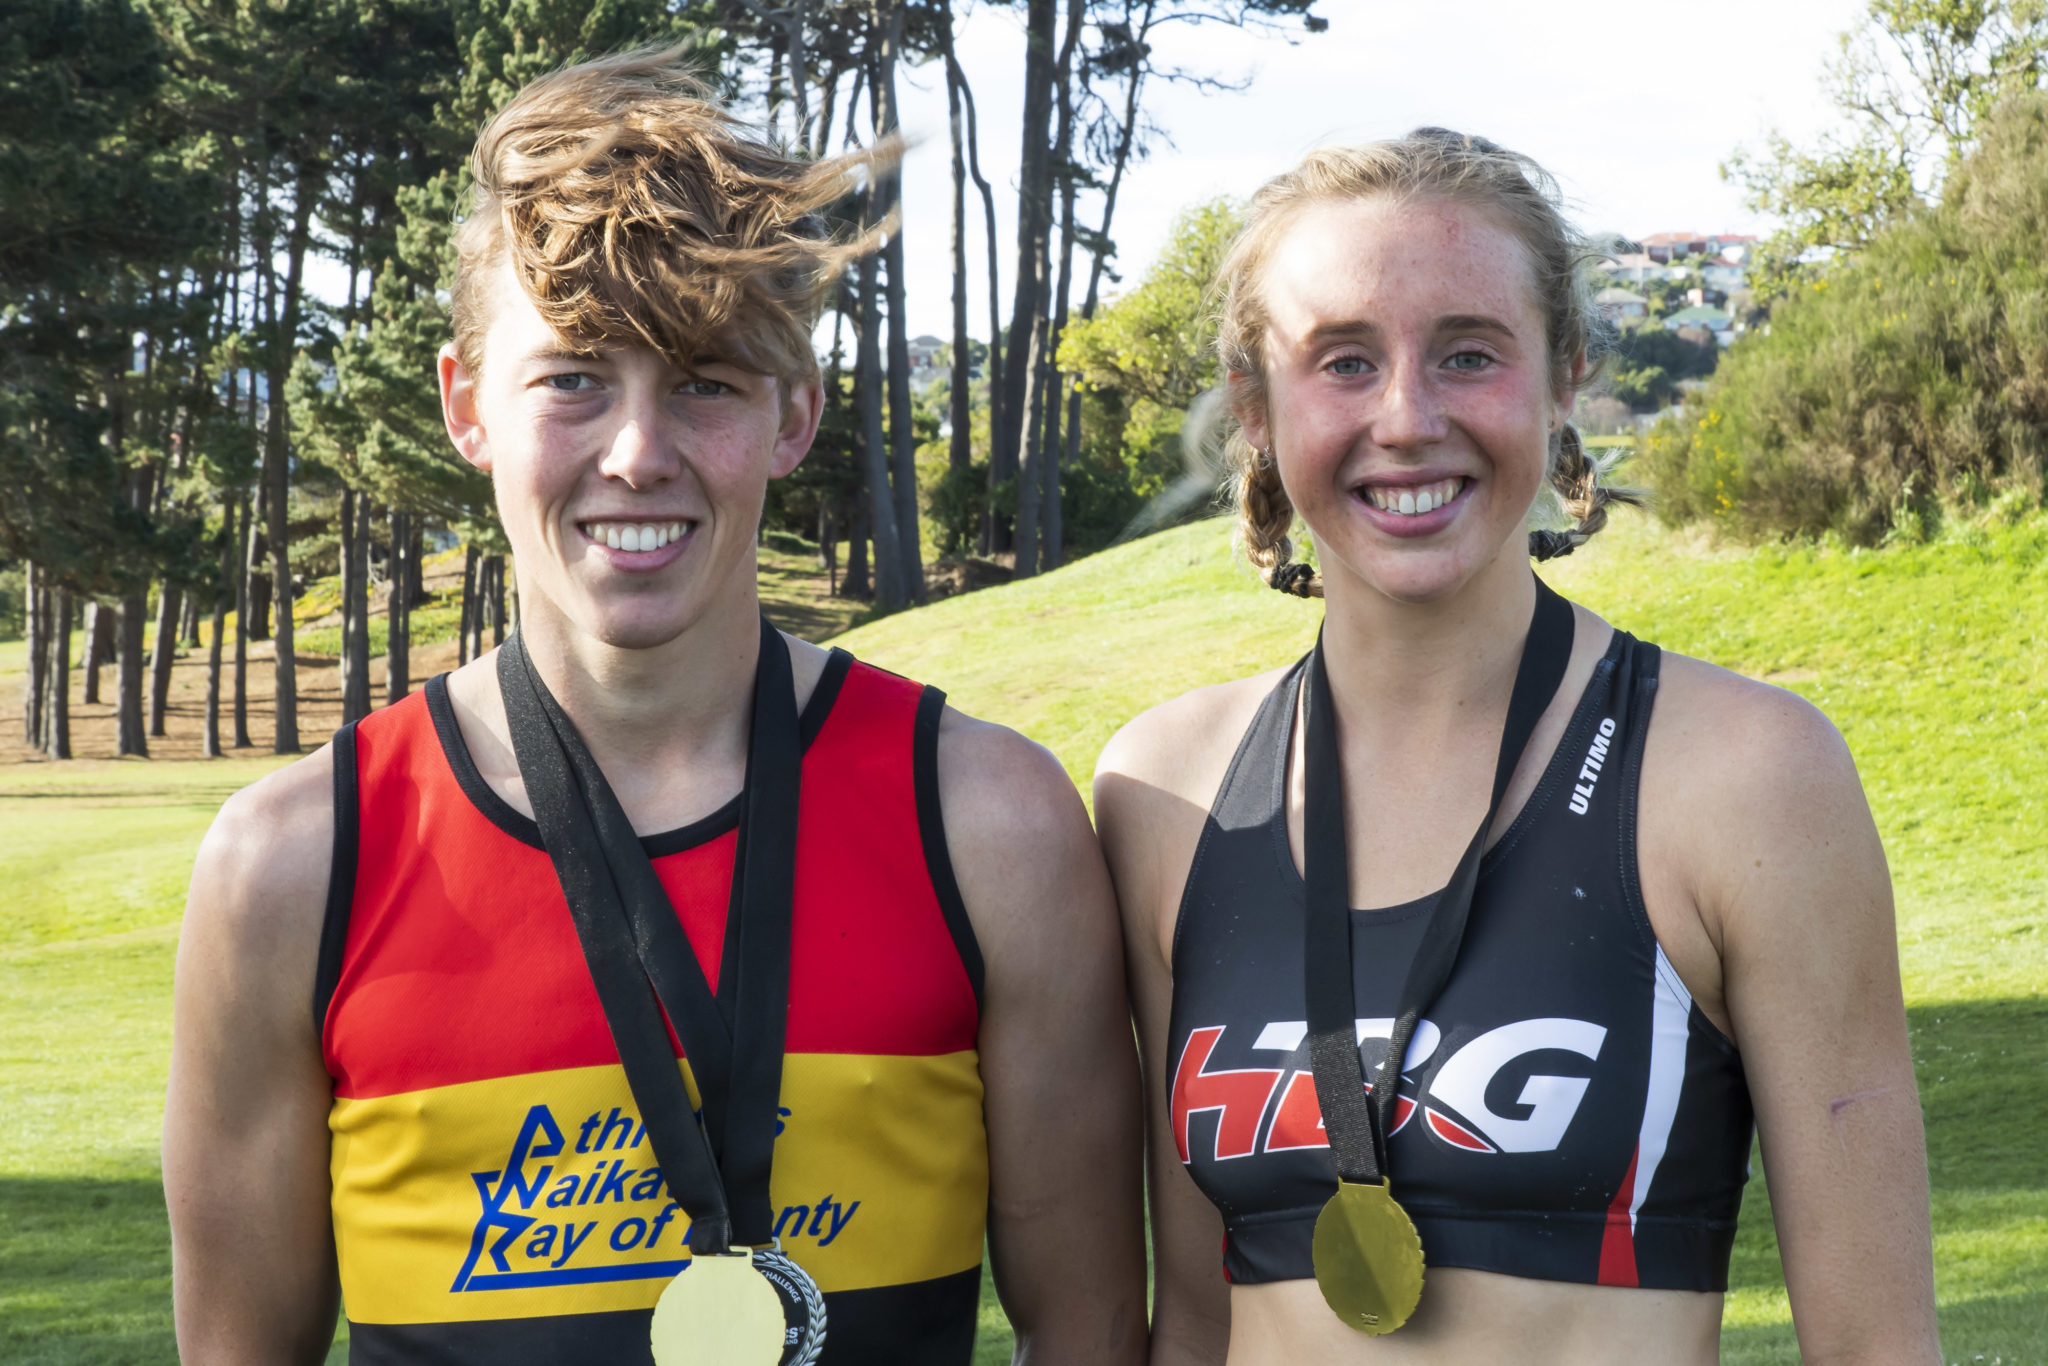 Stunning displays mark Cross Country Challenge - Athletics New Zealand